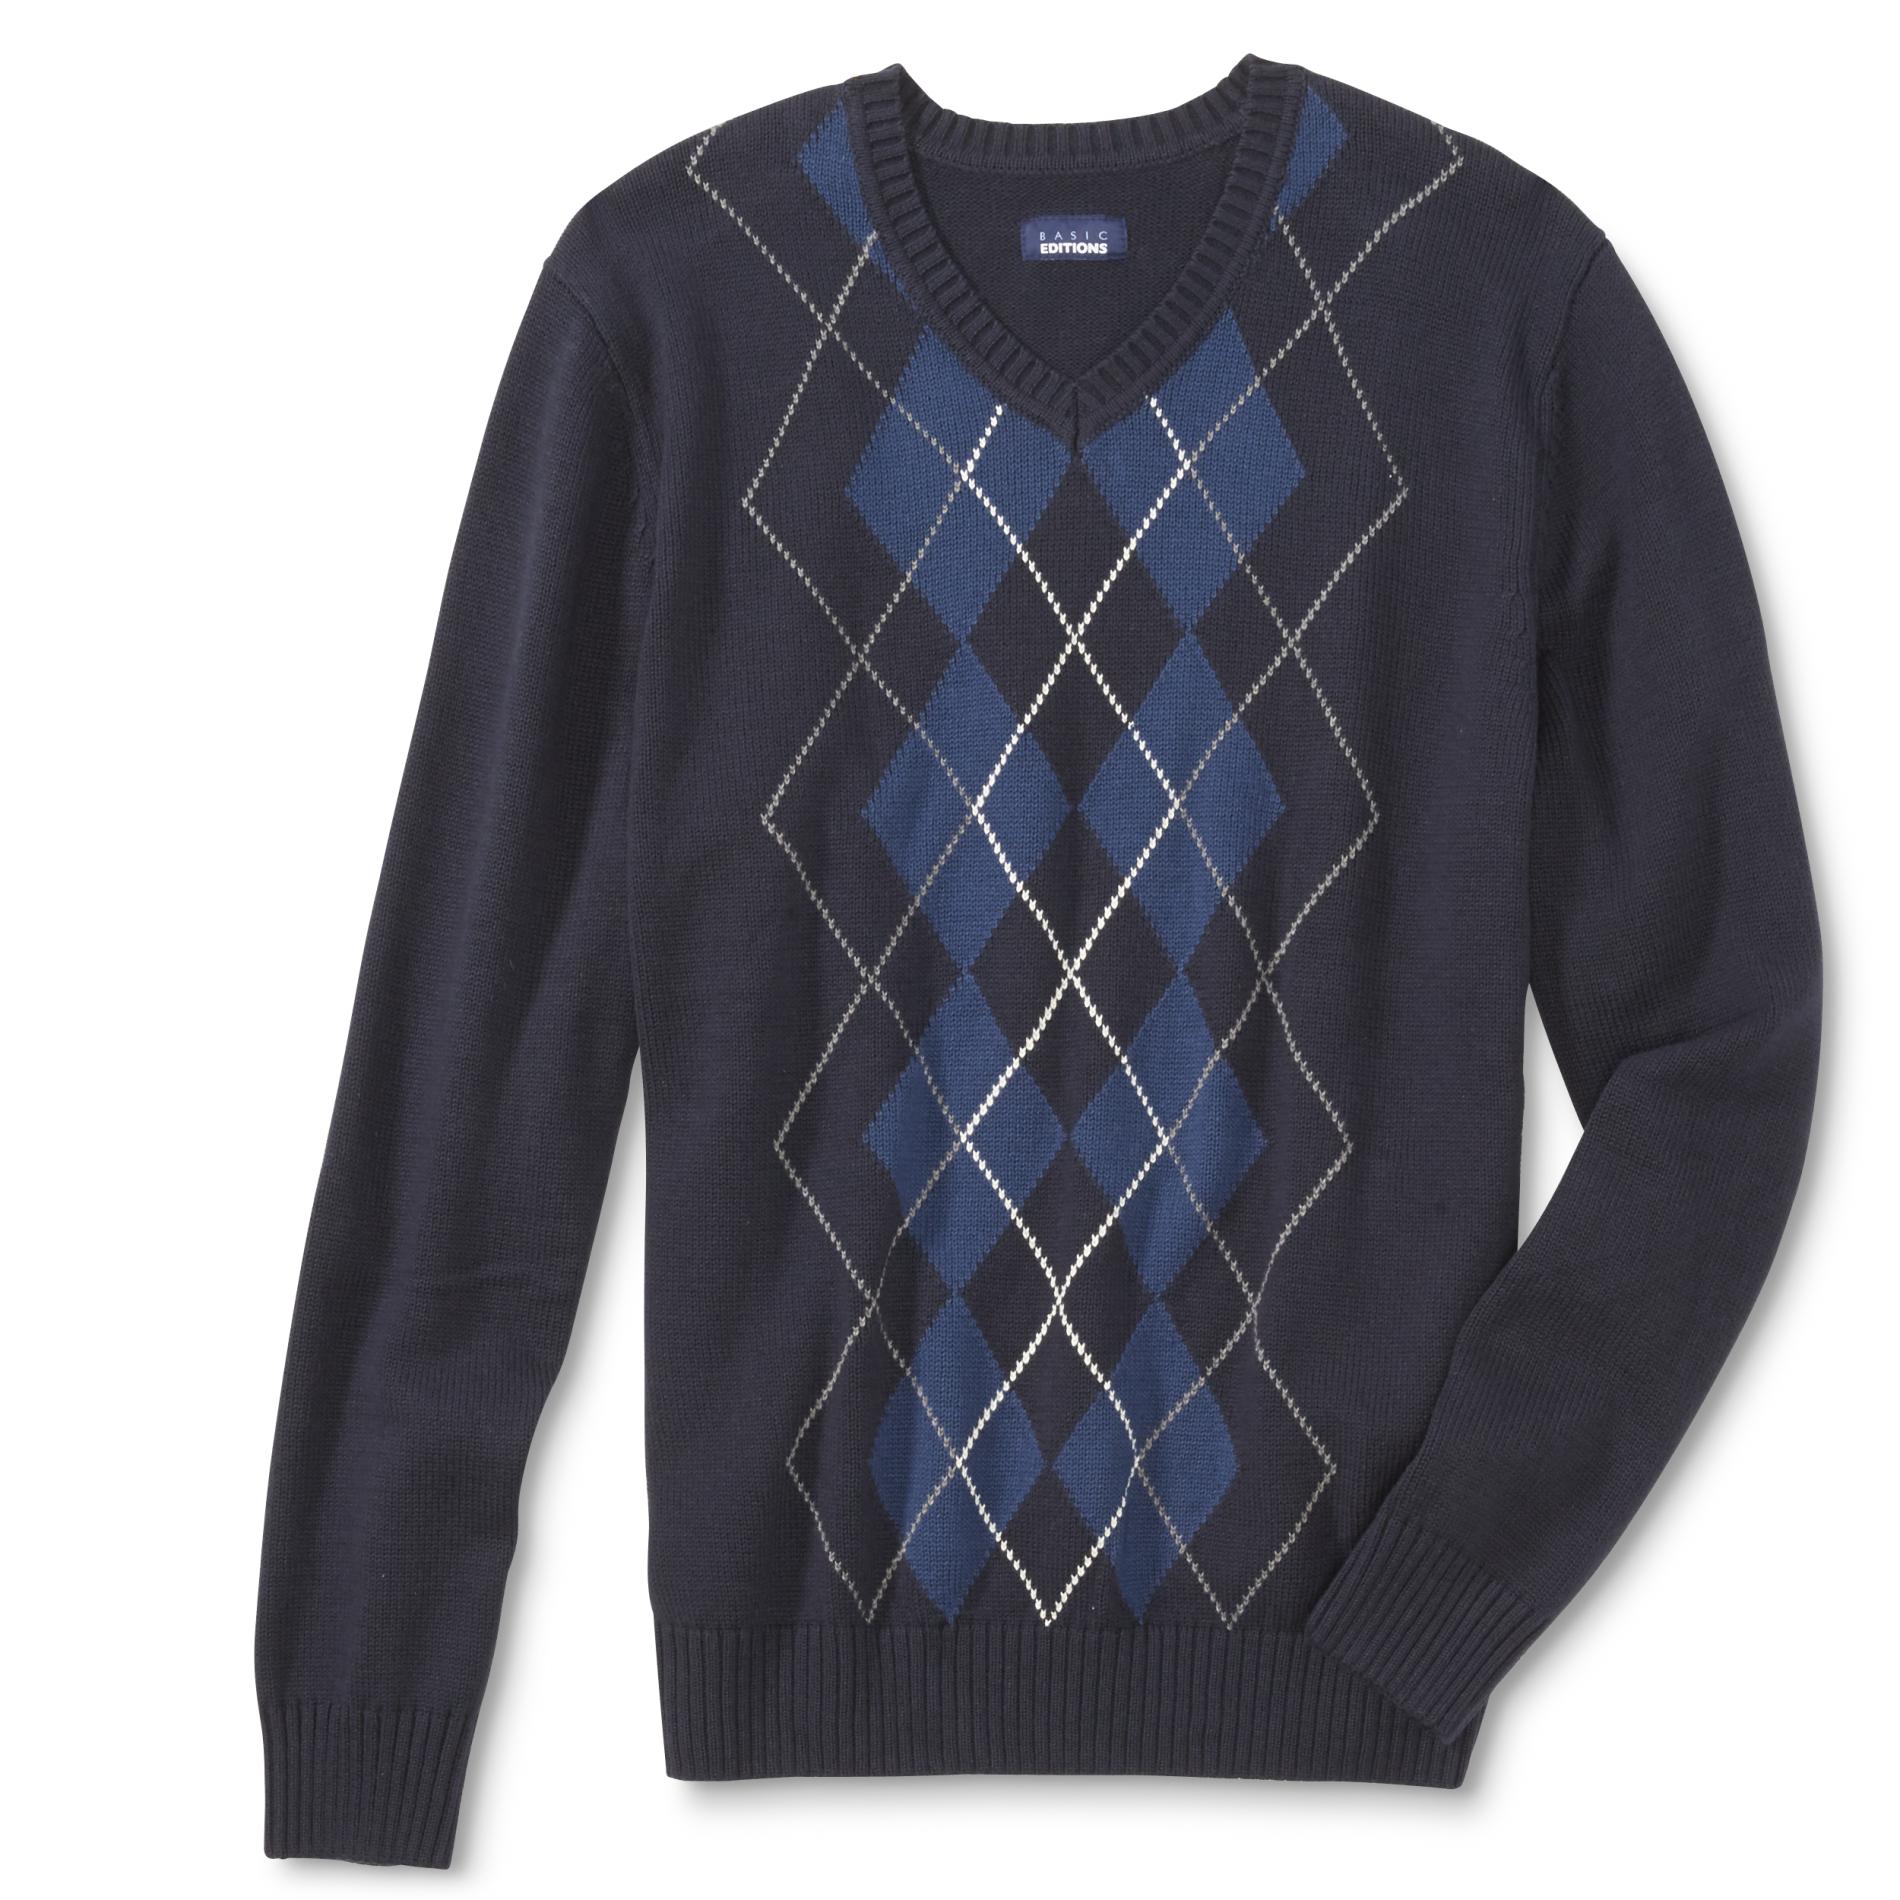 Basic Editions Men's V-Neck Sweater - Argyle